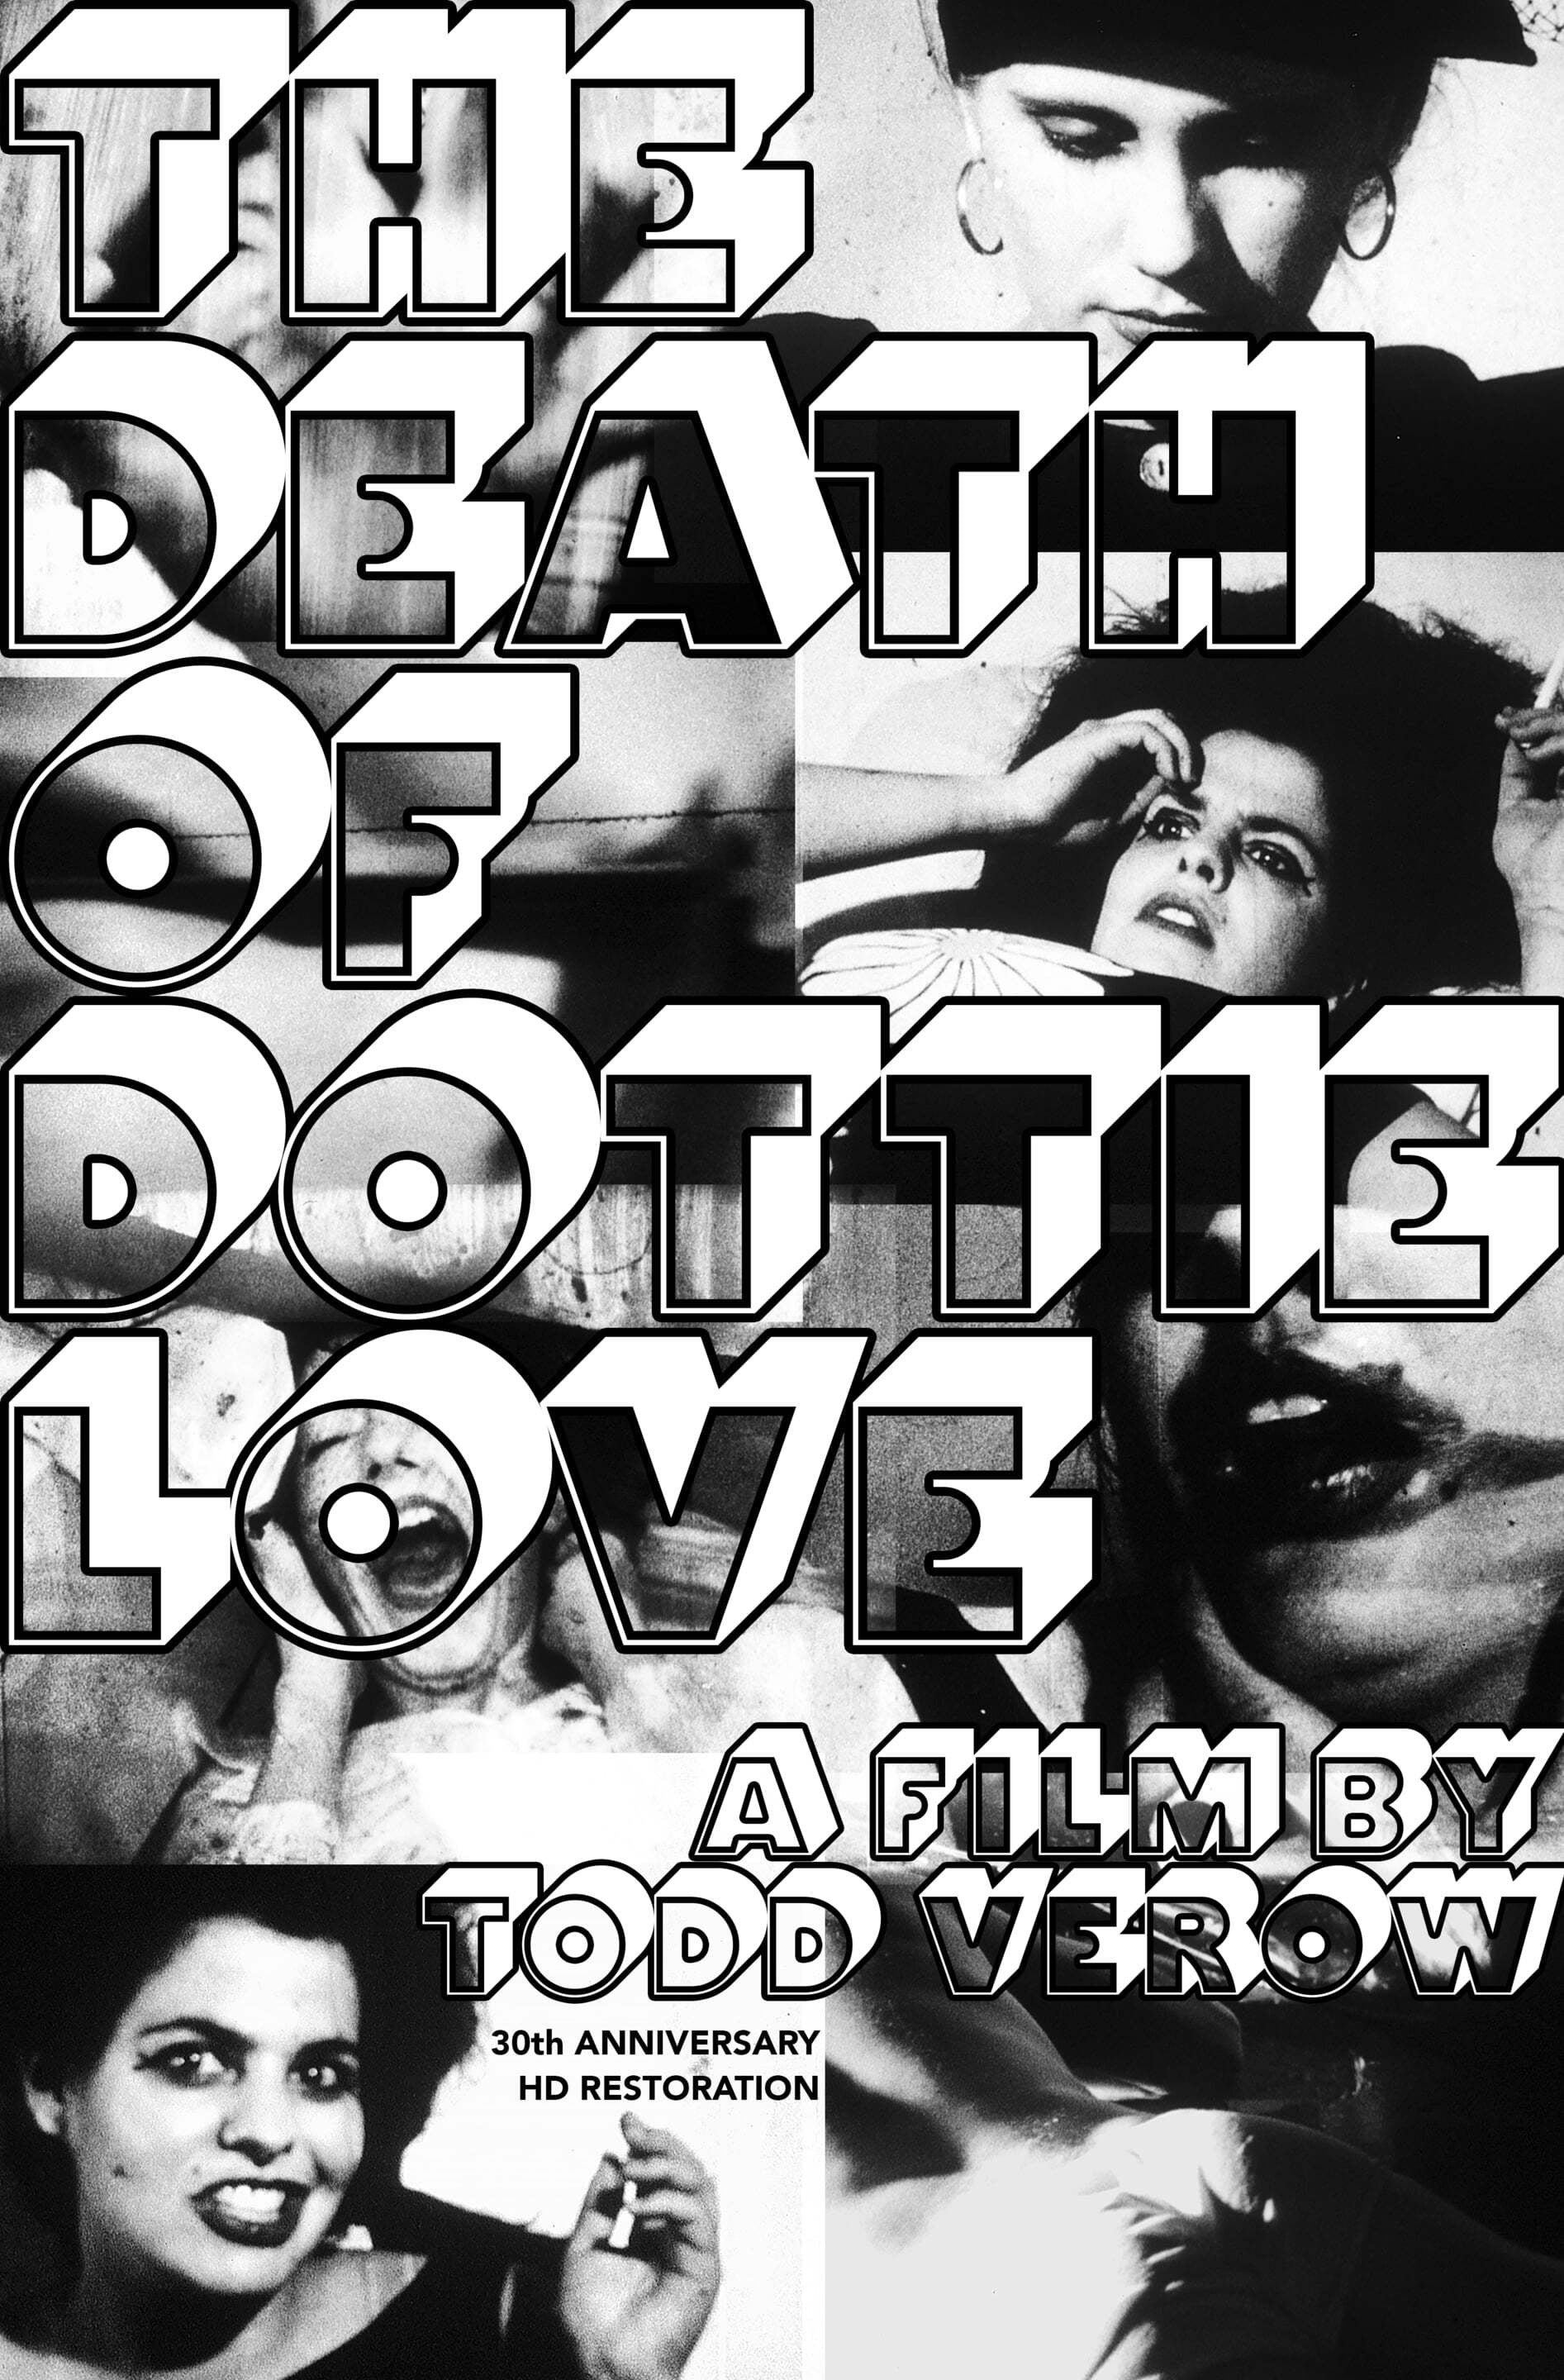 The Death of Dottie Love